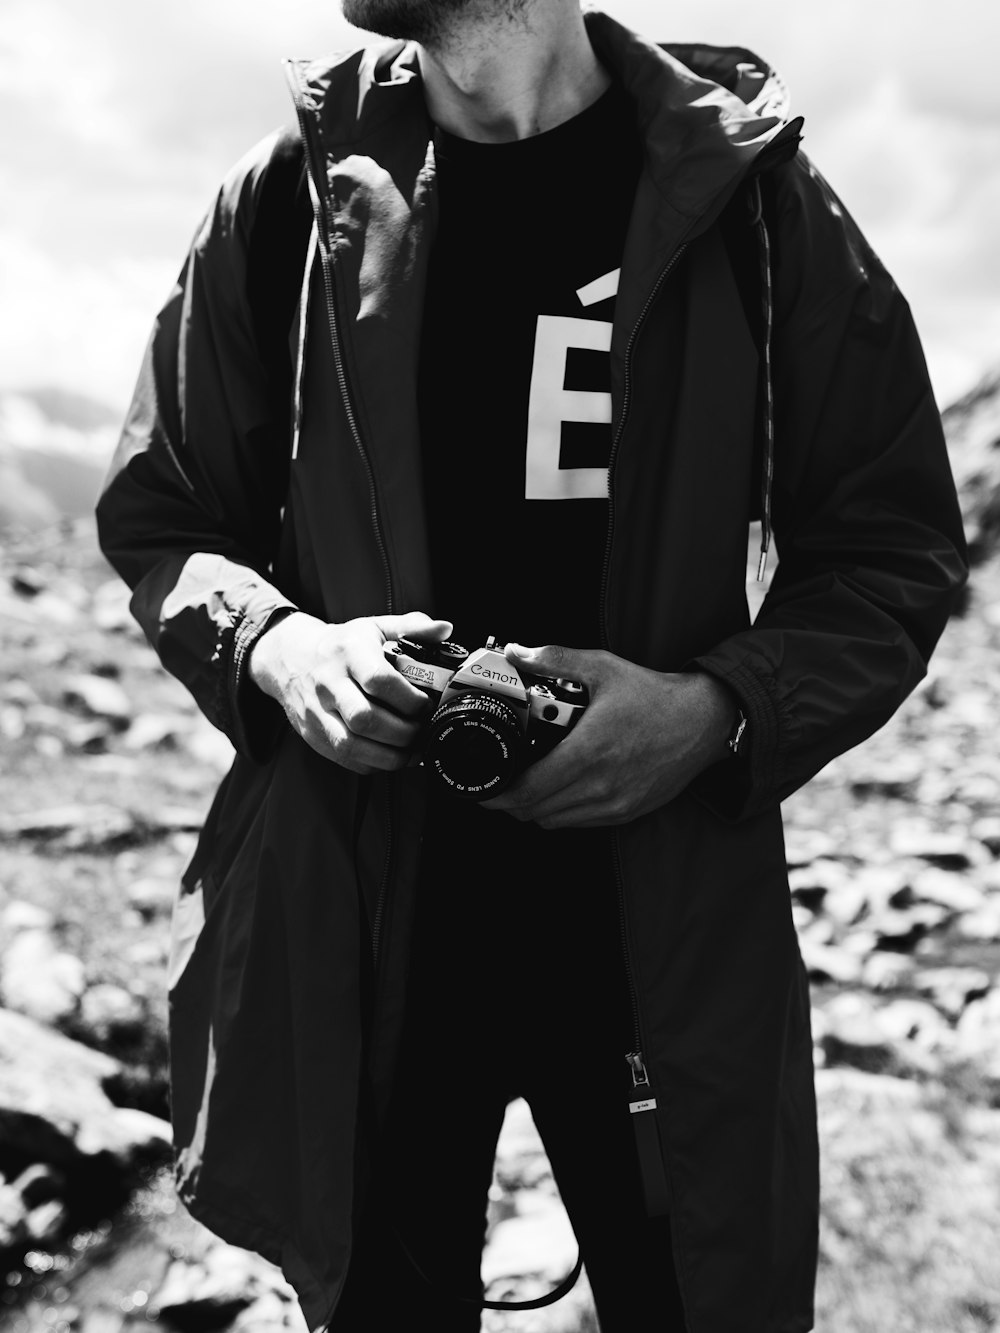 man in black zip up jacket holding black and silver dslr camera